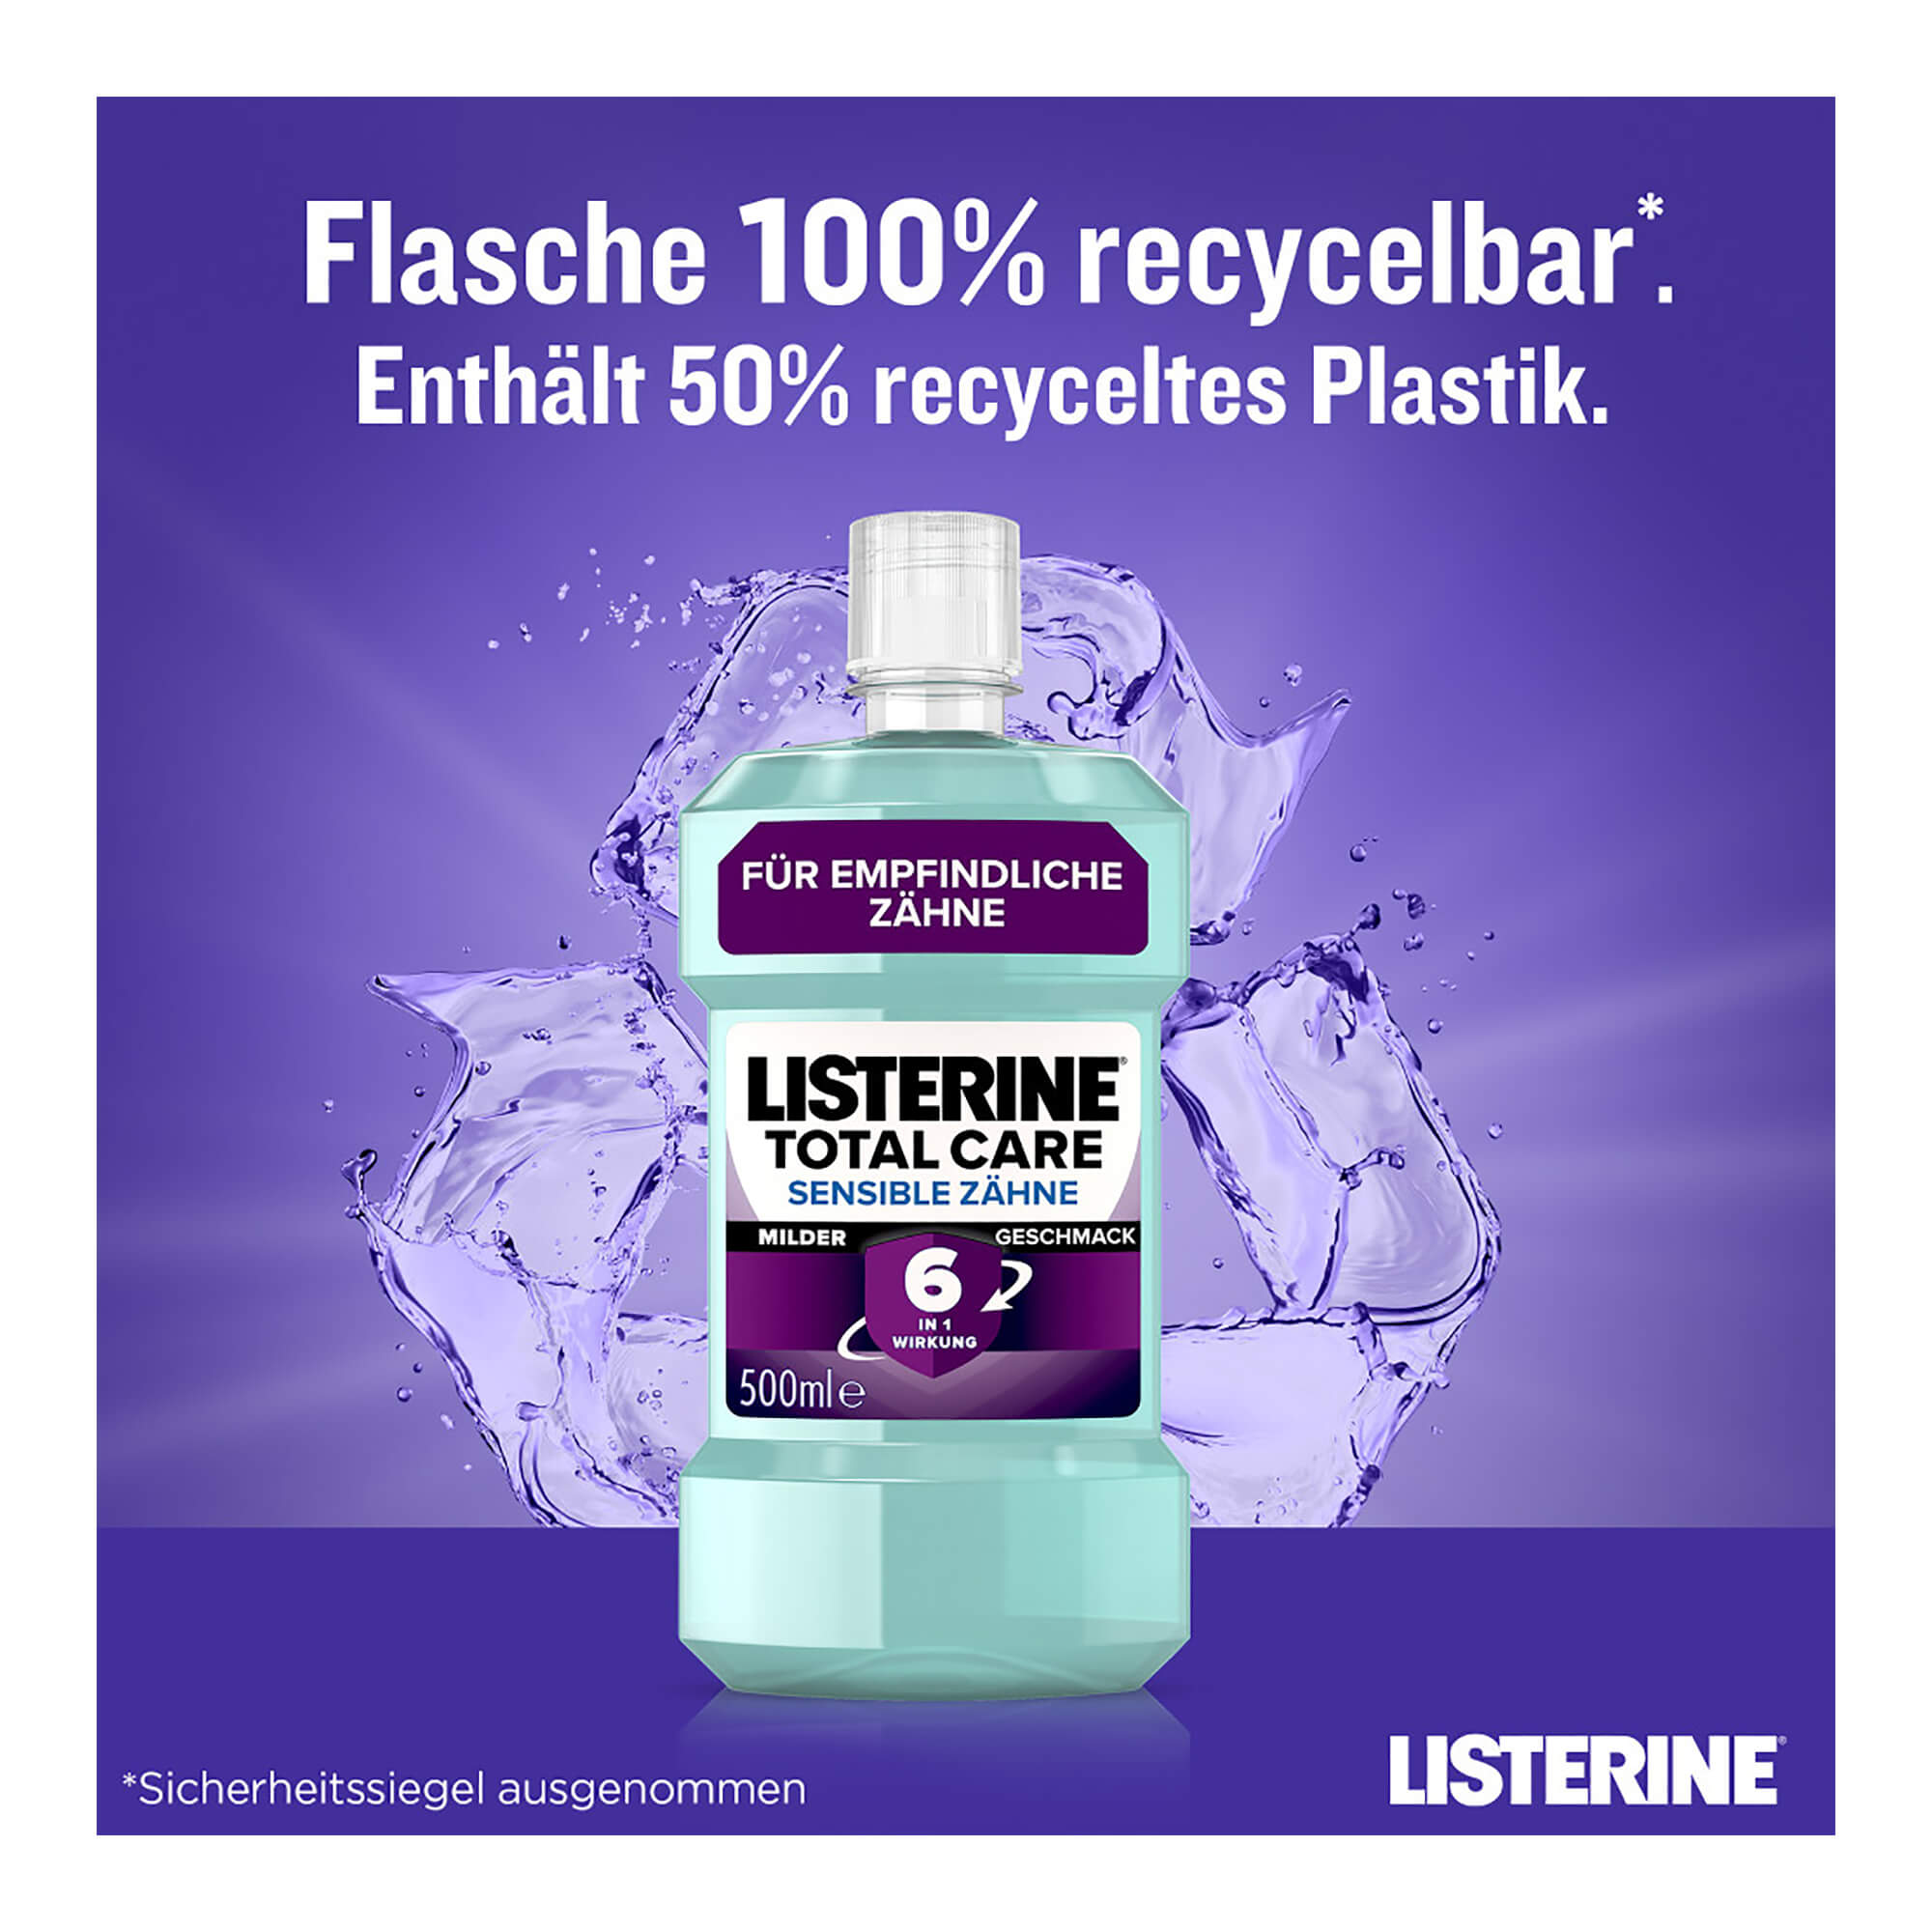 Listerine Total Care Sensible Zähne recycelbar